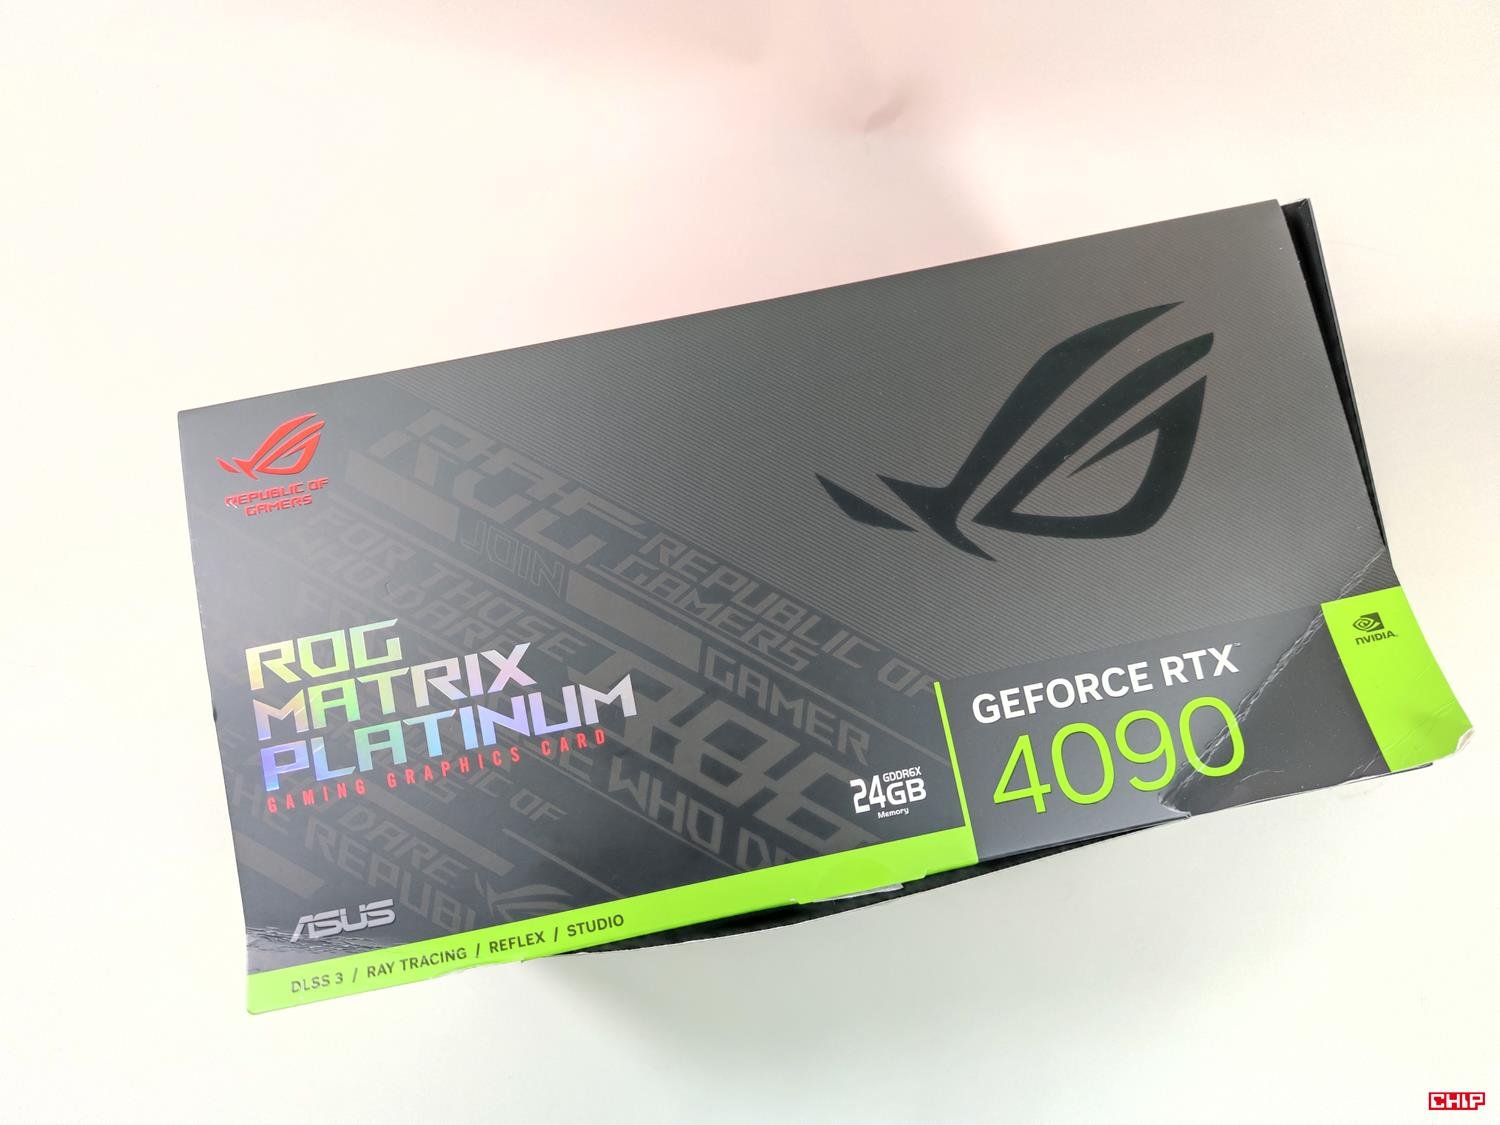 test Asus GeForce RTX 4090 ROG Matrix Platinum, recenzja Asus GeForce RTX 4090 ROG Matrix Platinum, opinia Asus GeForce RTX 4090 ROG Matrix Platinum